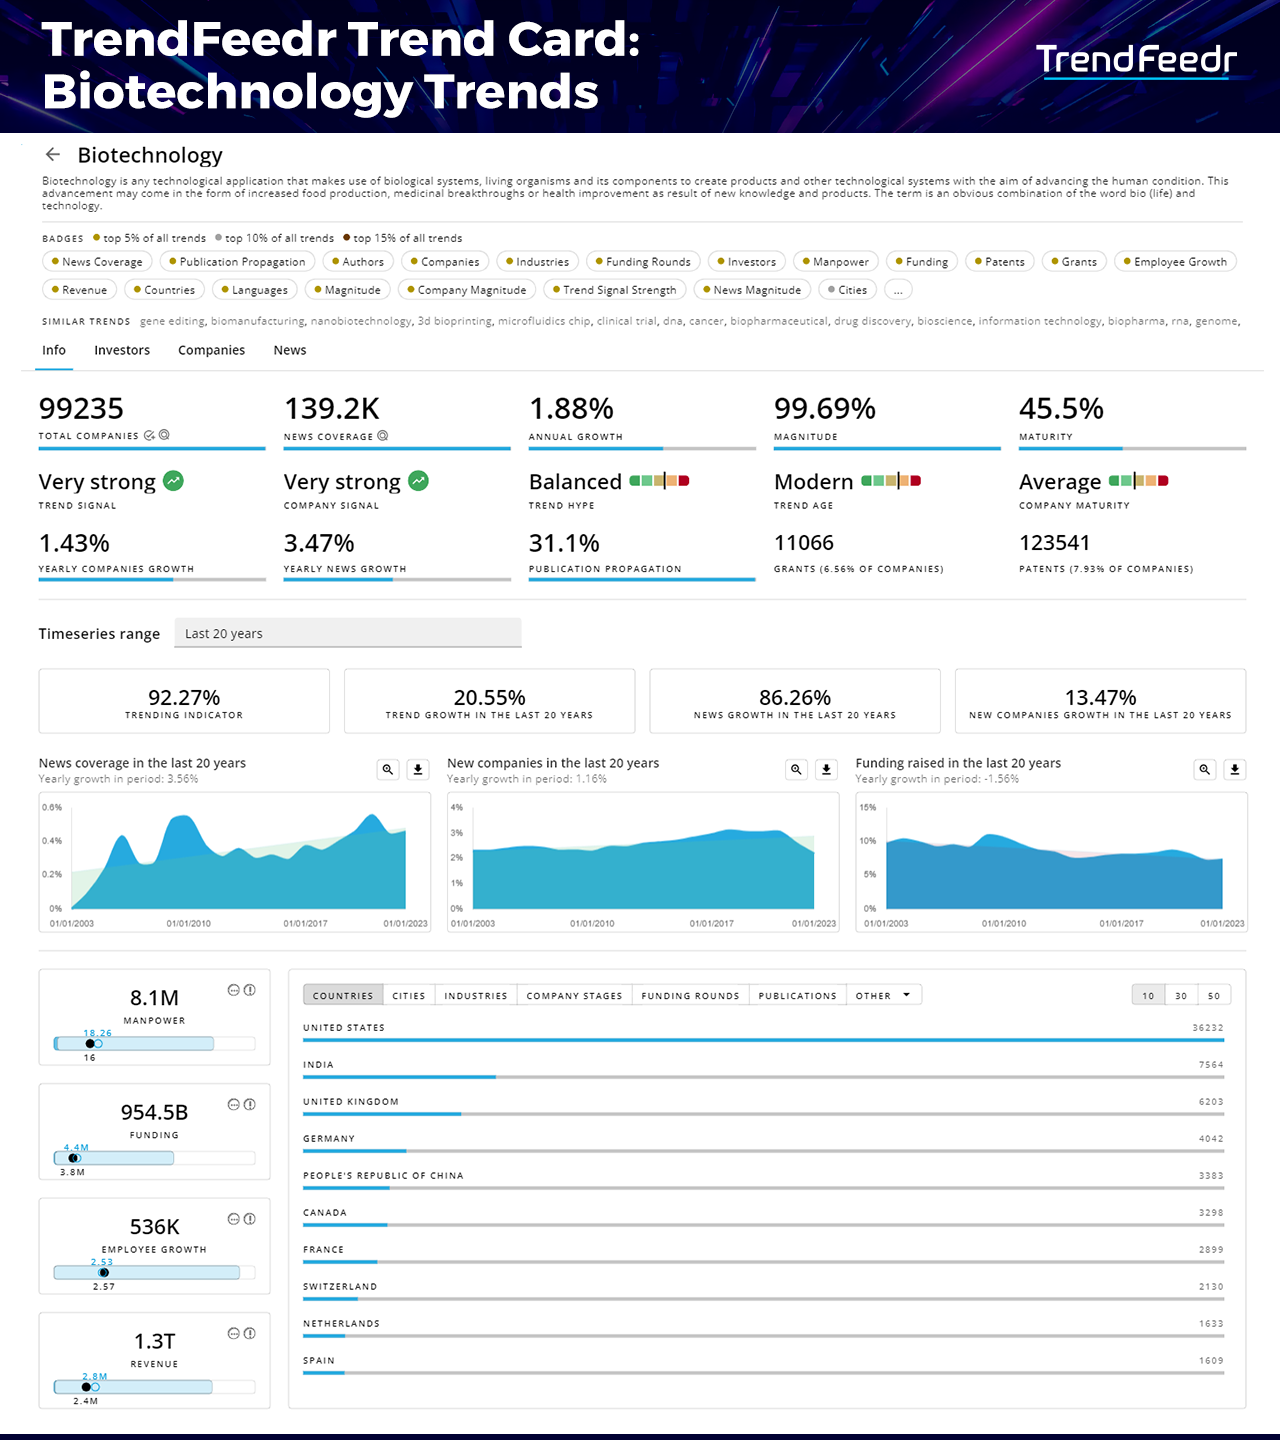 Report-Trends-in-Biotechnology-TrendCard-TrendFeedr-noresize